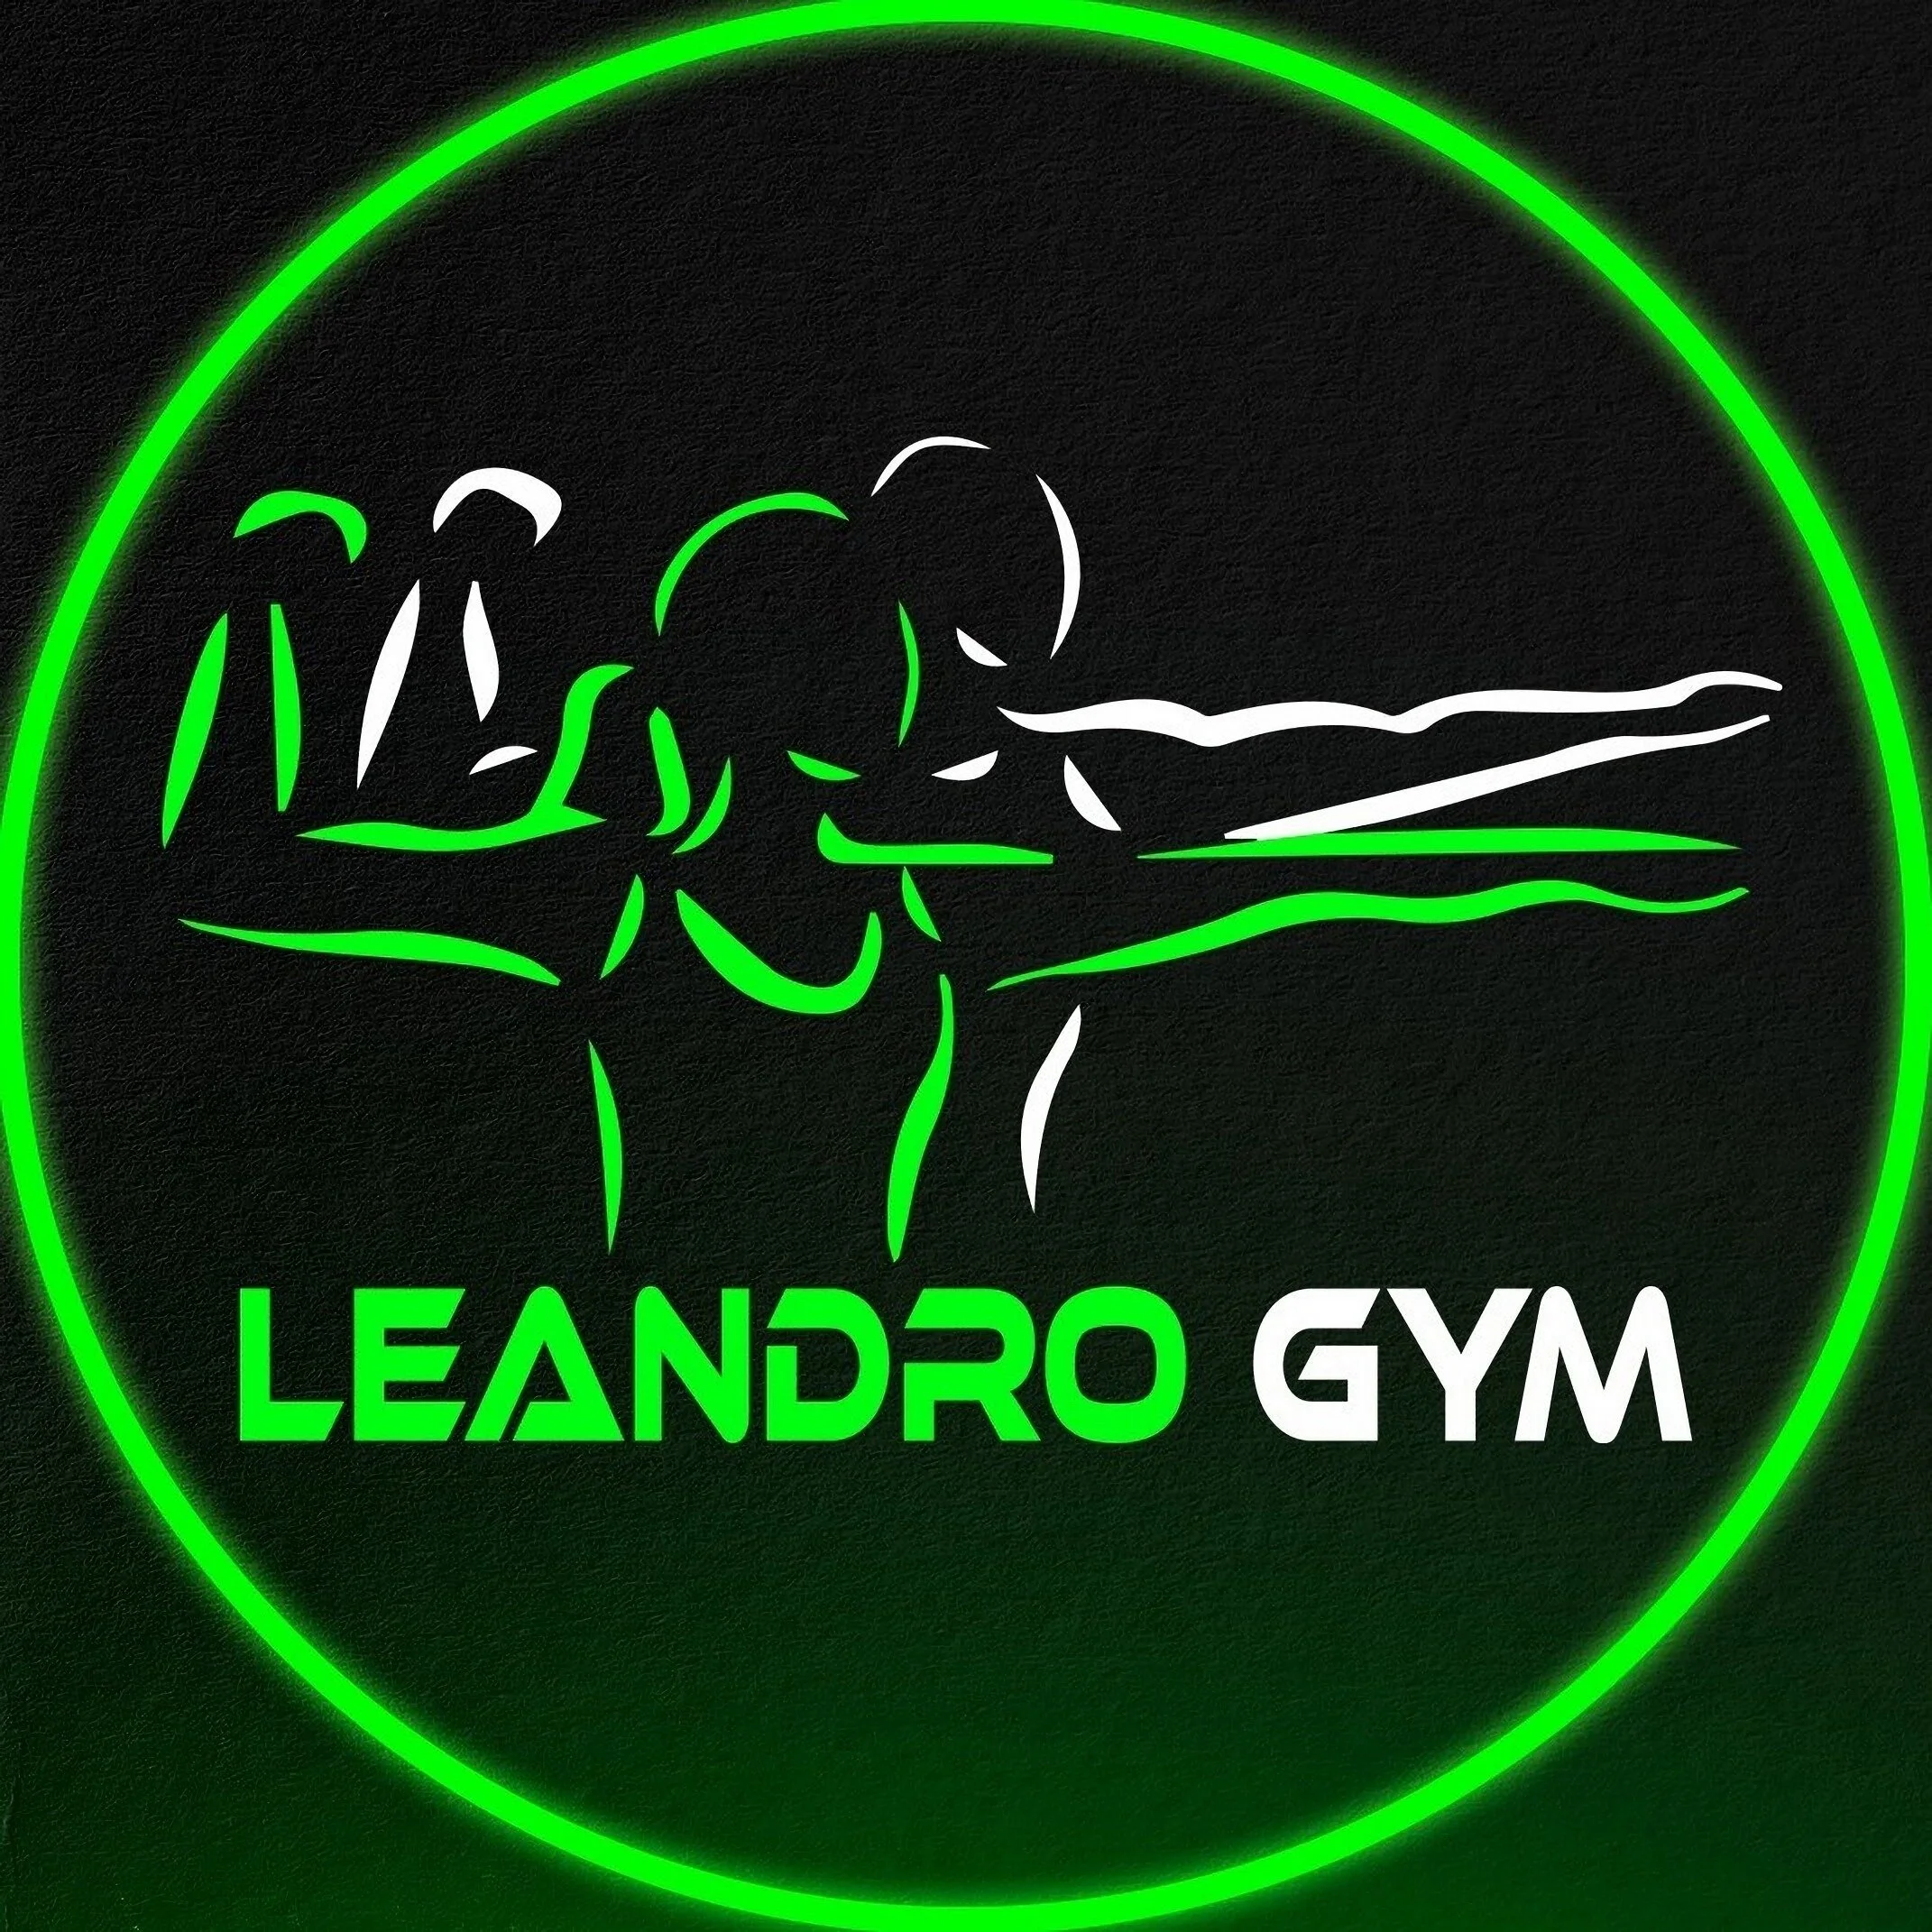 Gimnasio-leandro-gym-6967